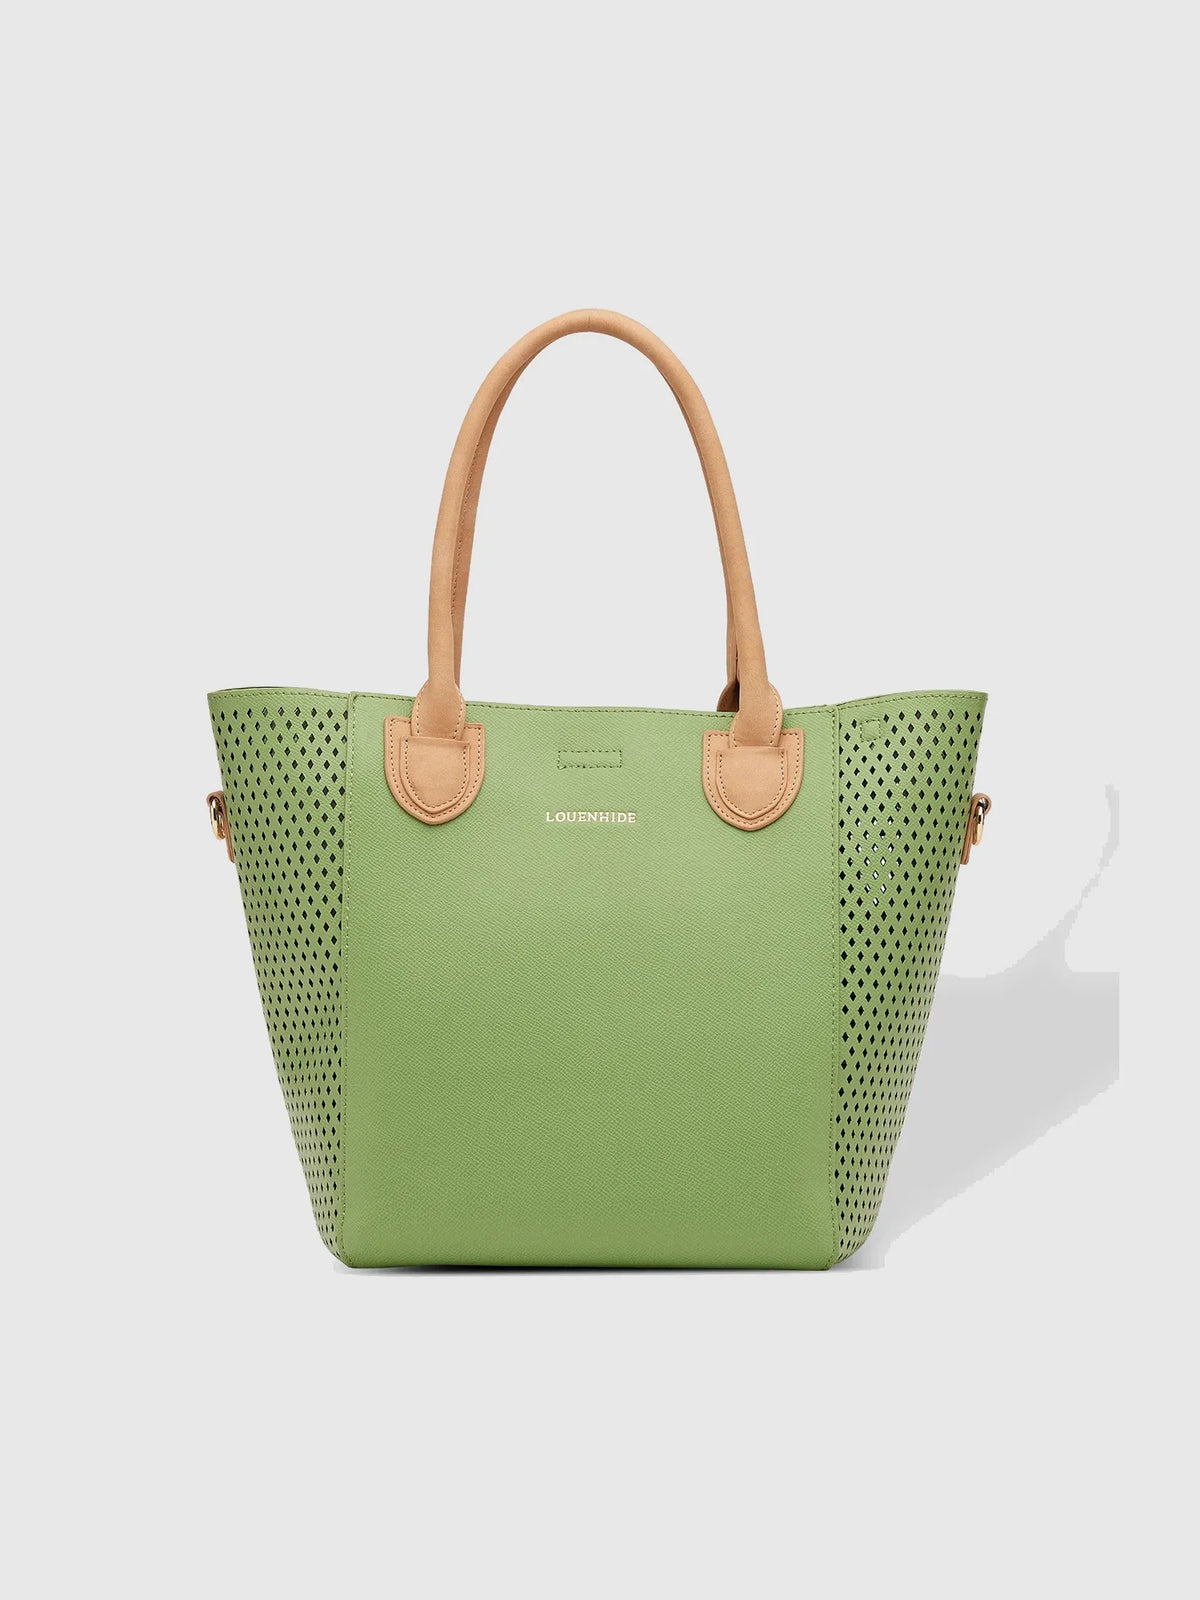 LOUENHIDE dublin leather tote bag in avocado green